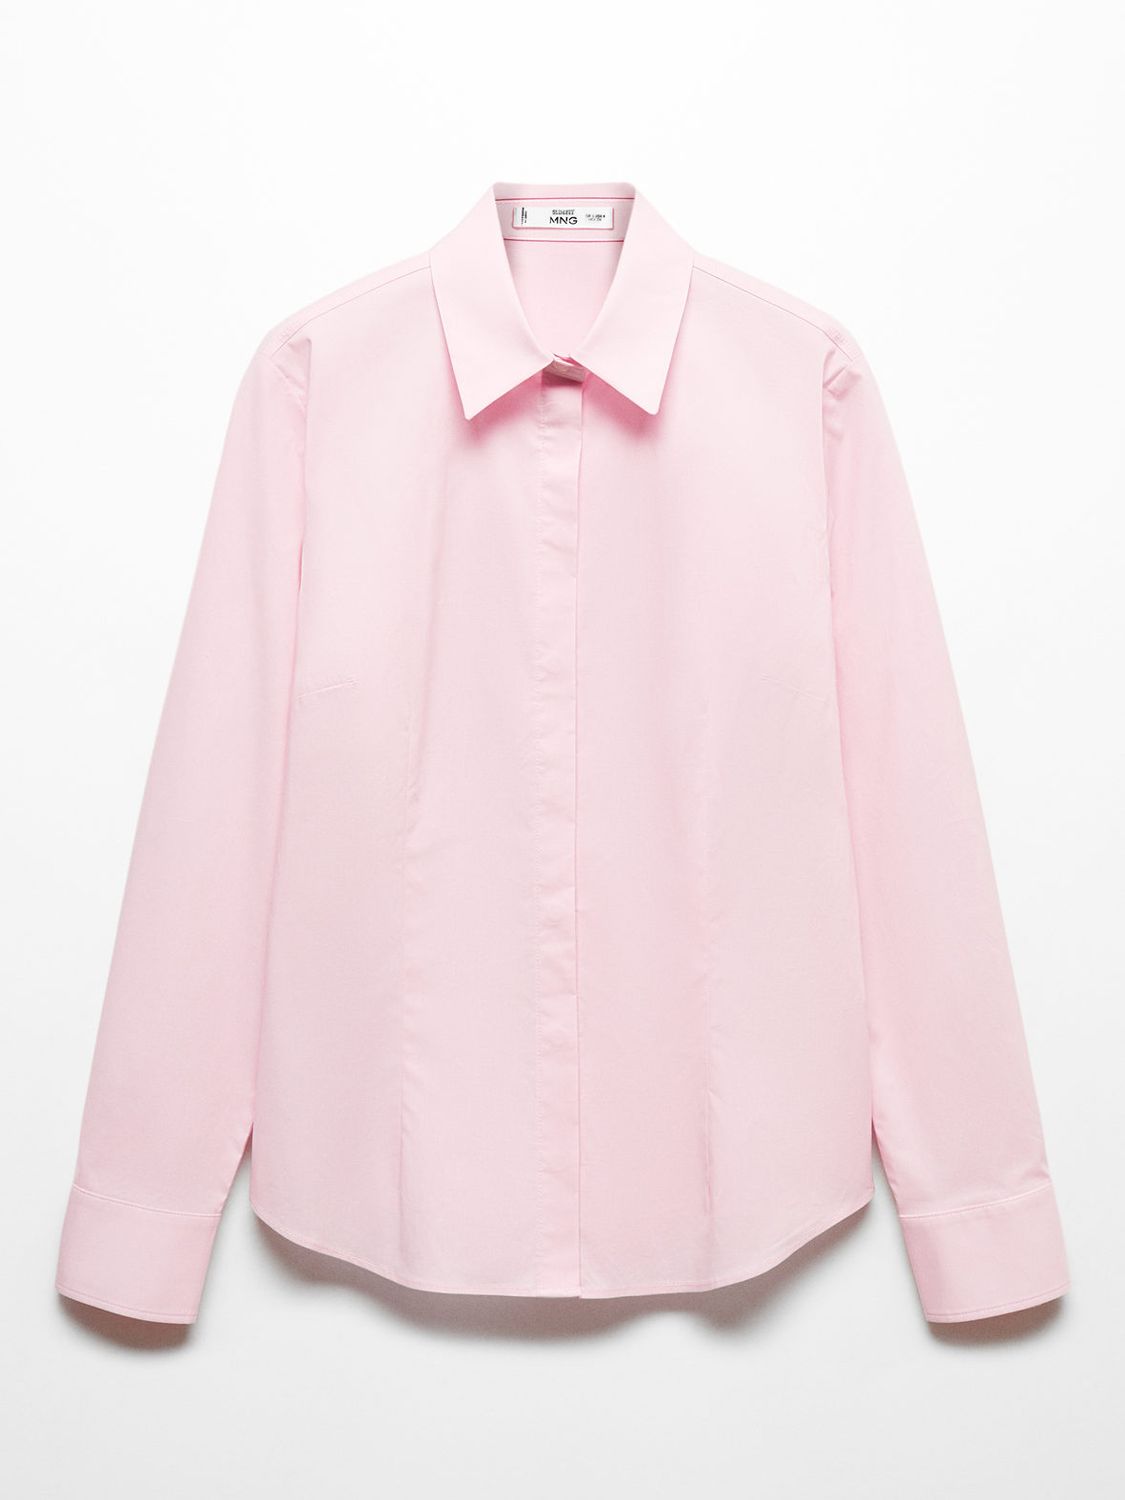 Mango Sofia Essential Long Sleeve Shirt, Pink at John Lewis & Partners